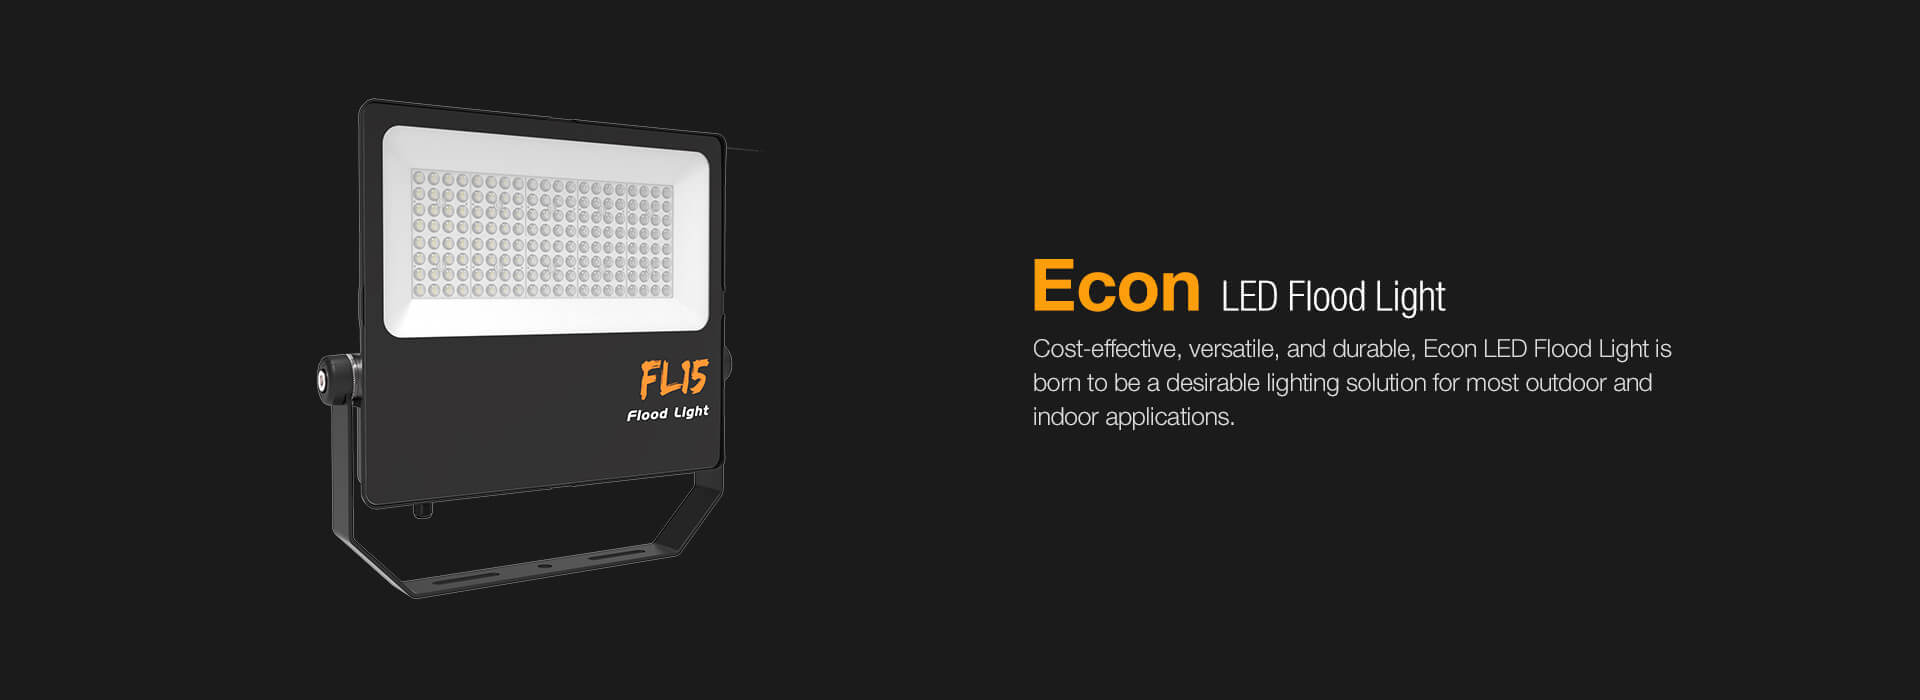 Econ LED Flood Light